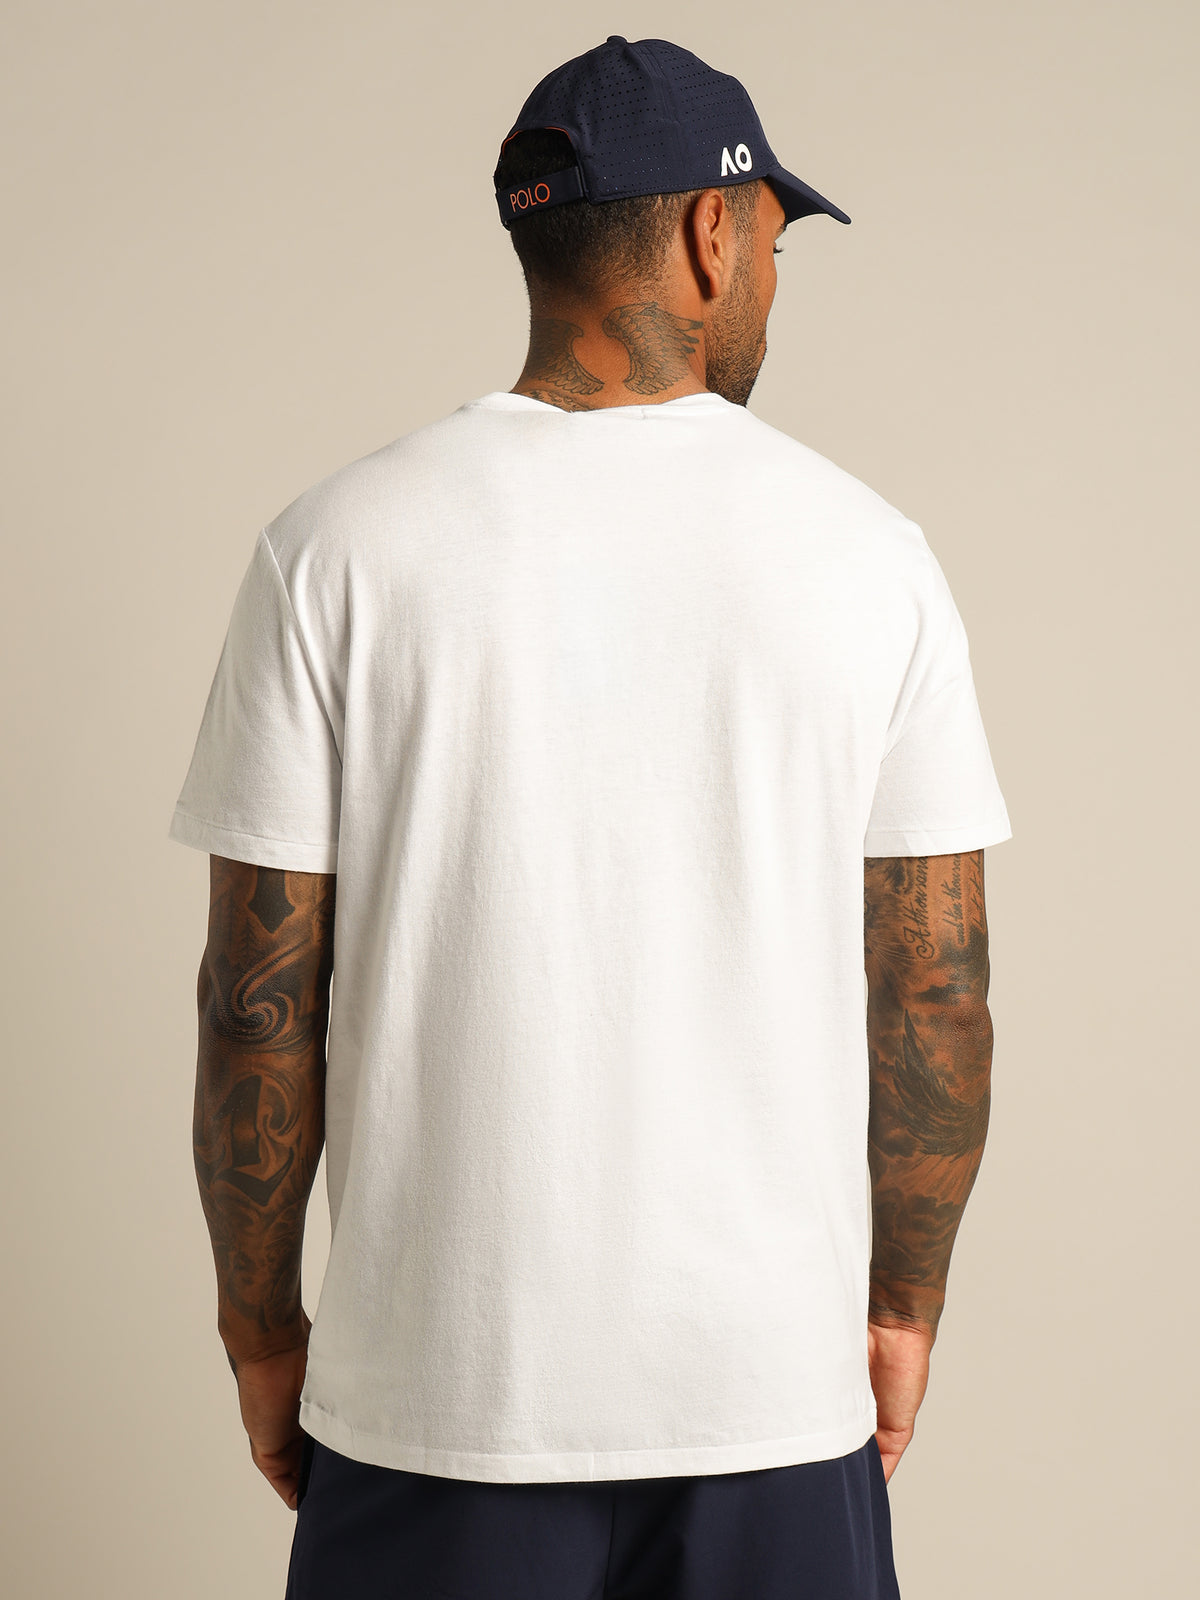 Australian Open Graphic T-Shirt in White